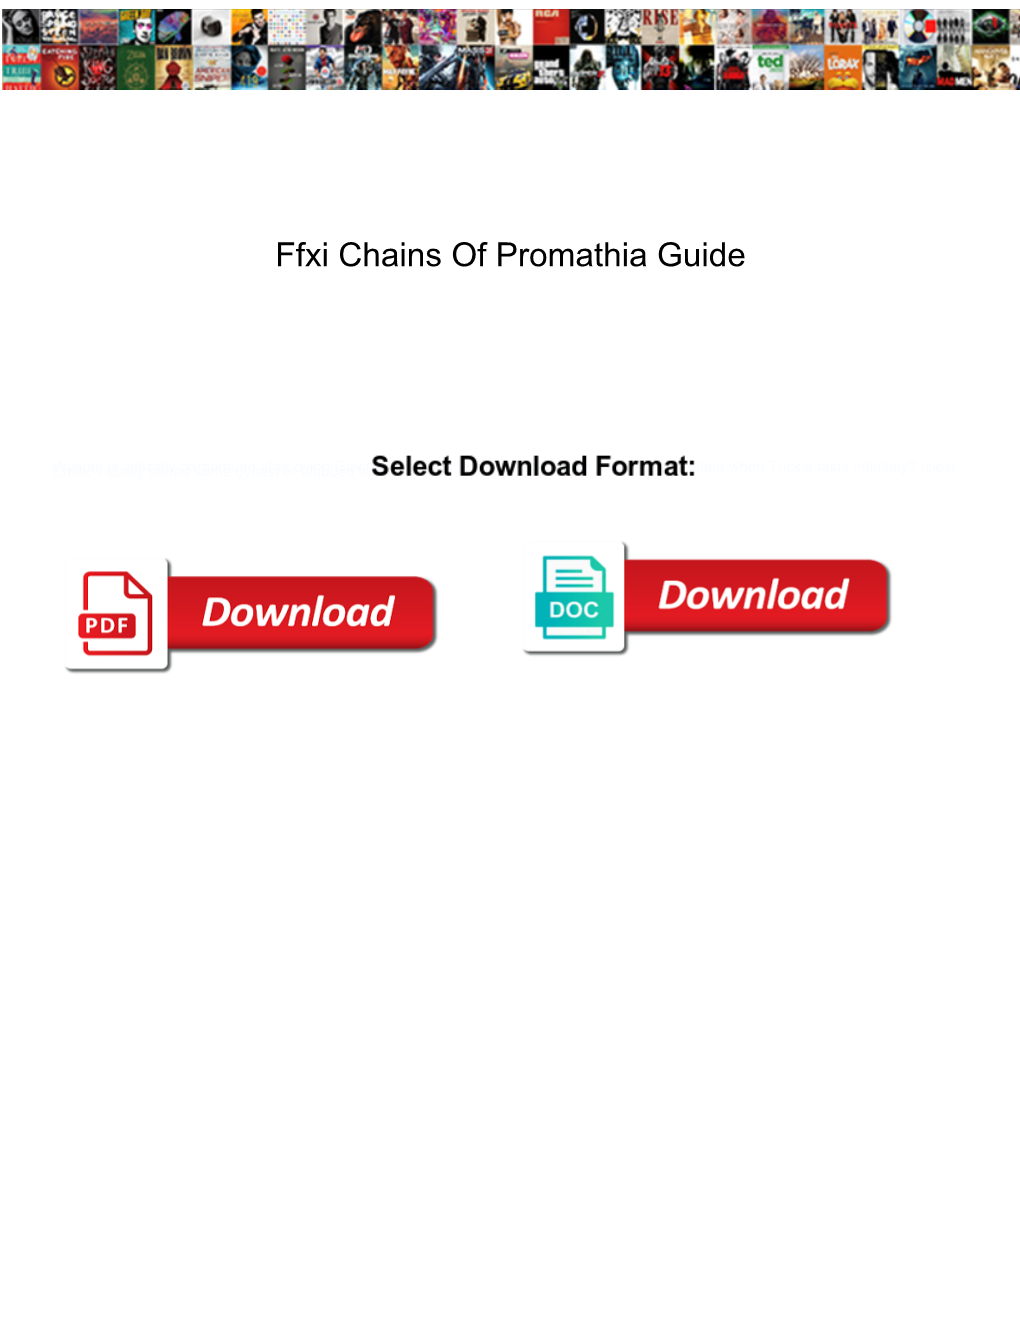 Ffxi Chains of Promathia Guide